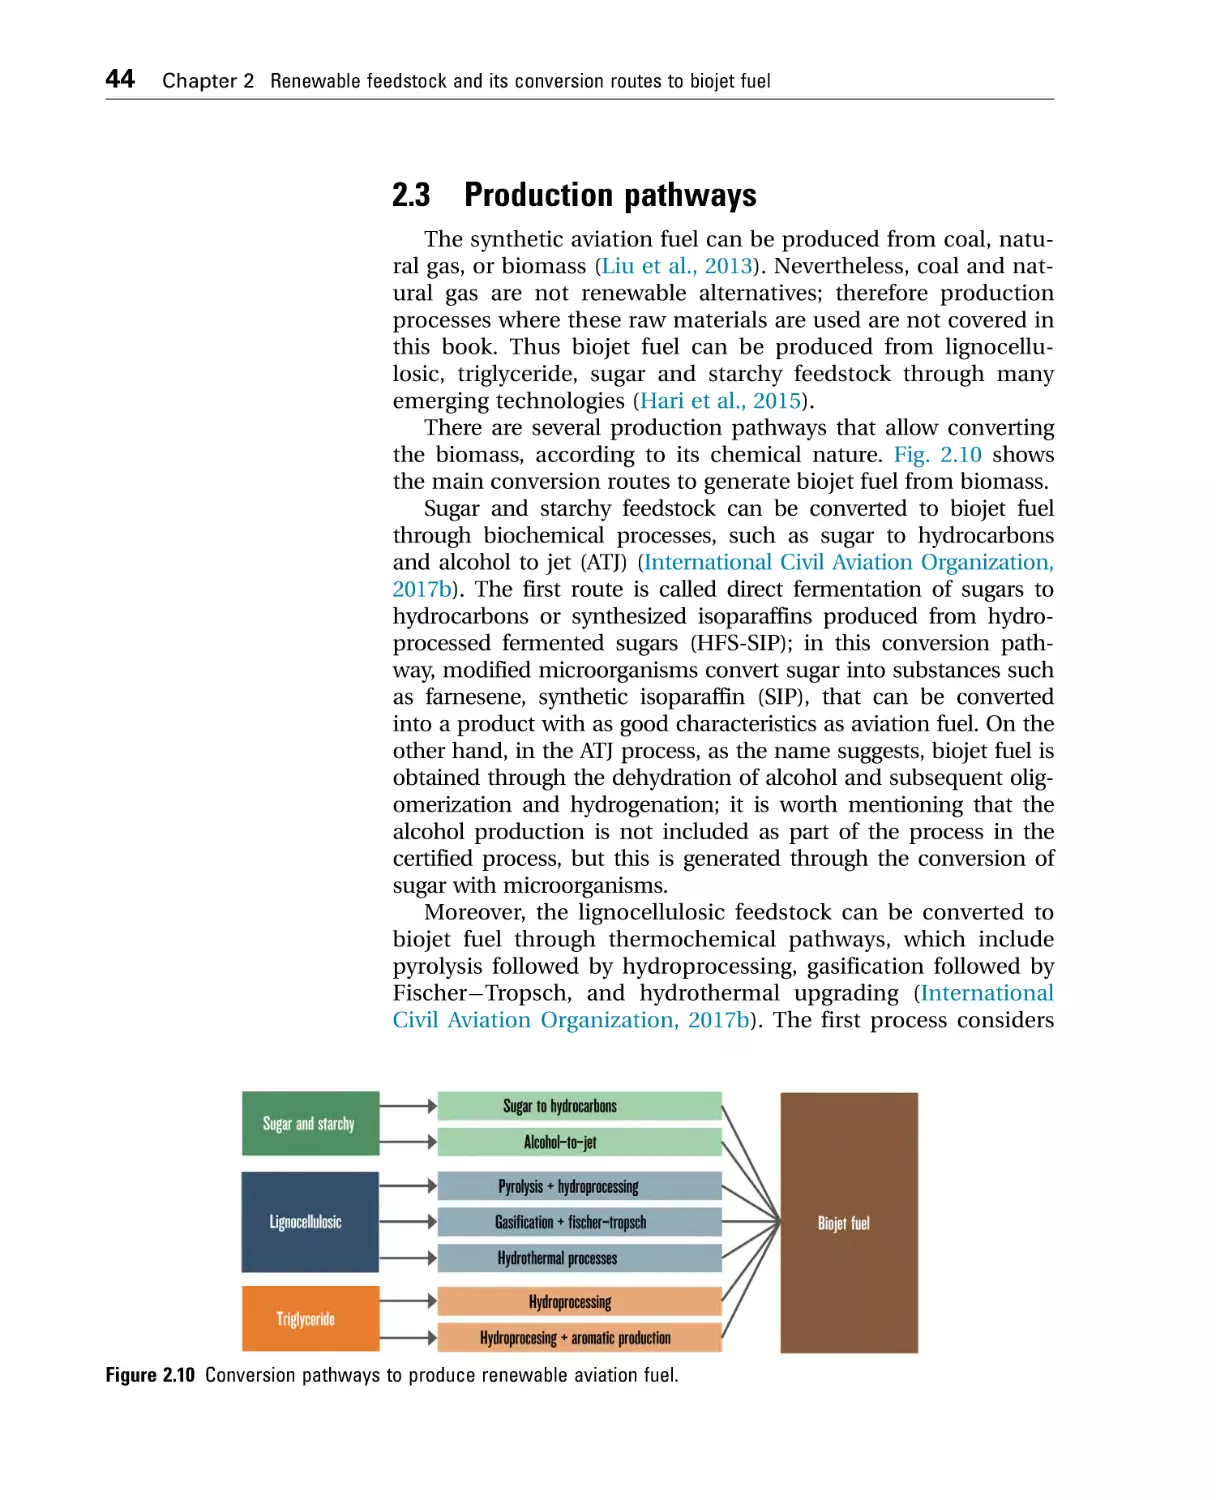 2.3 Production pathways